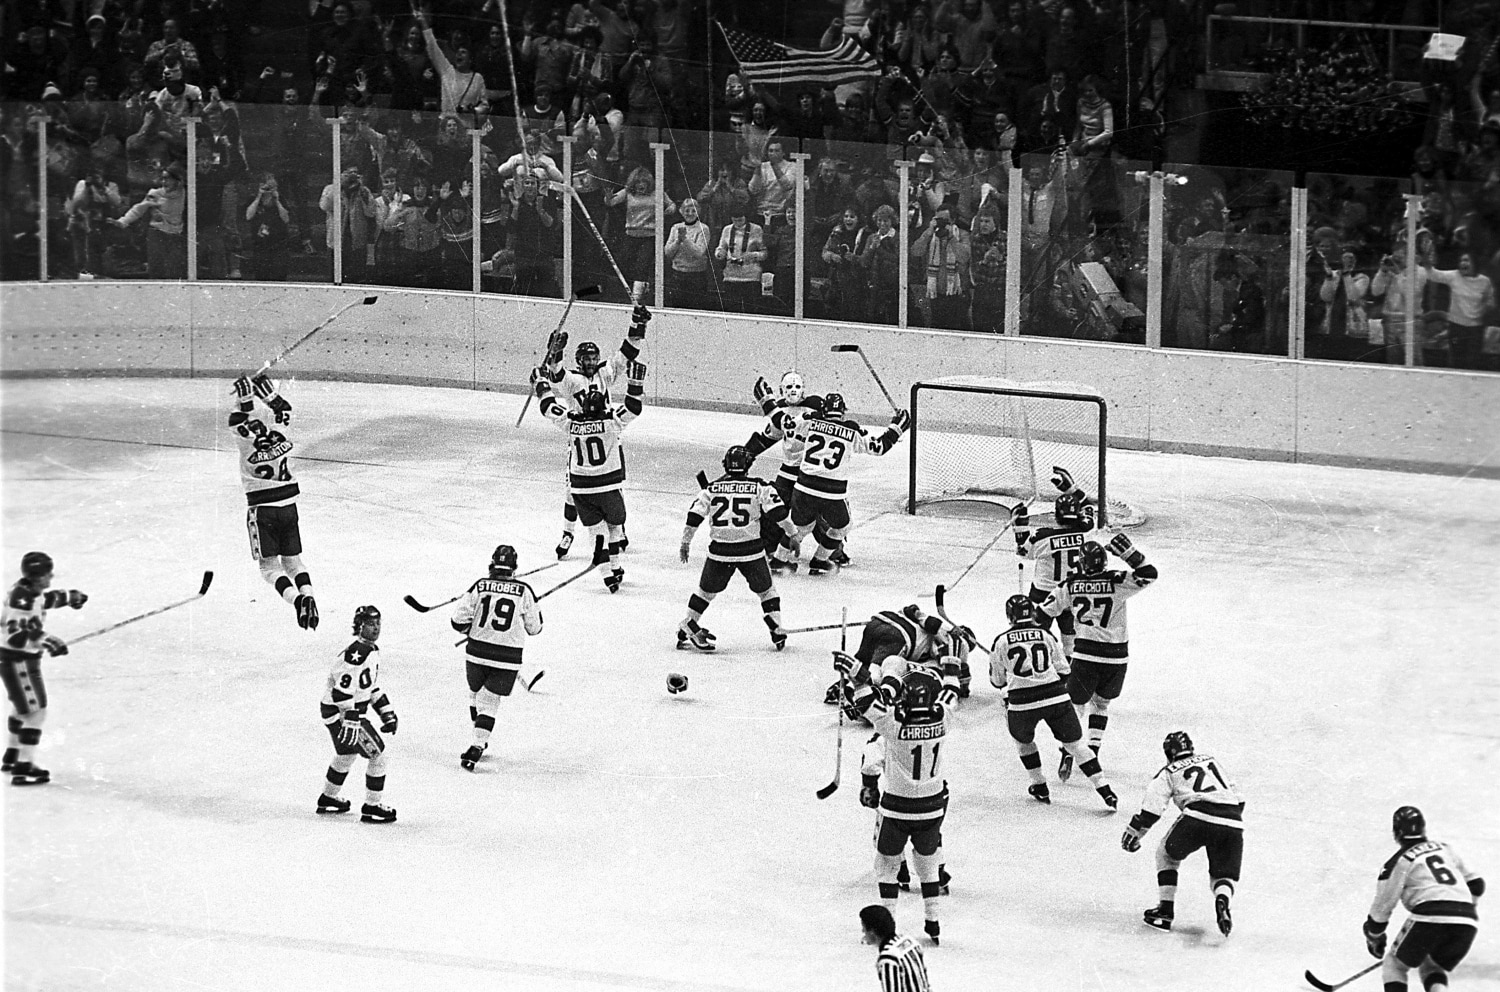 Team USA 1980 Hockey Jersey - Senior